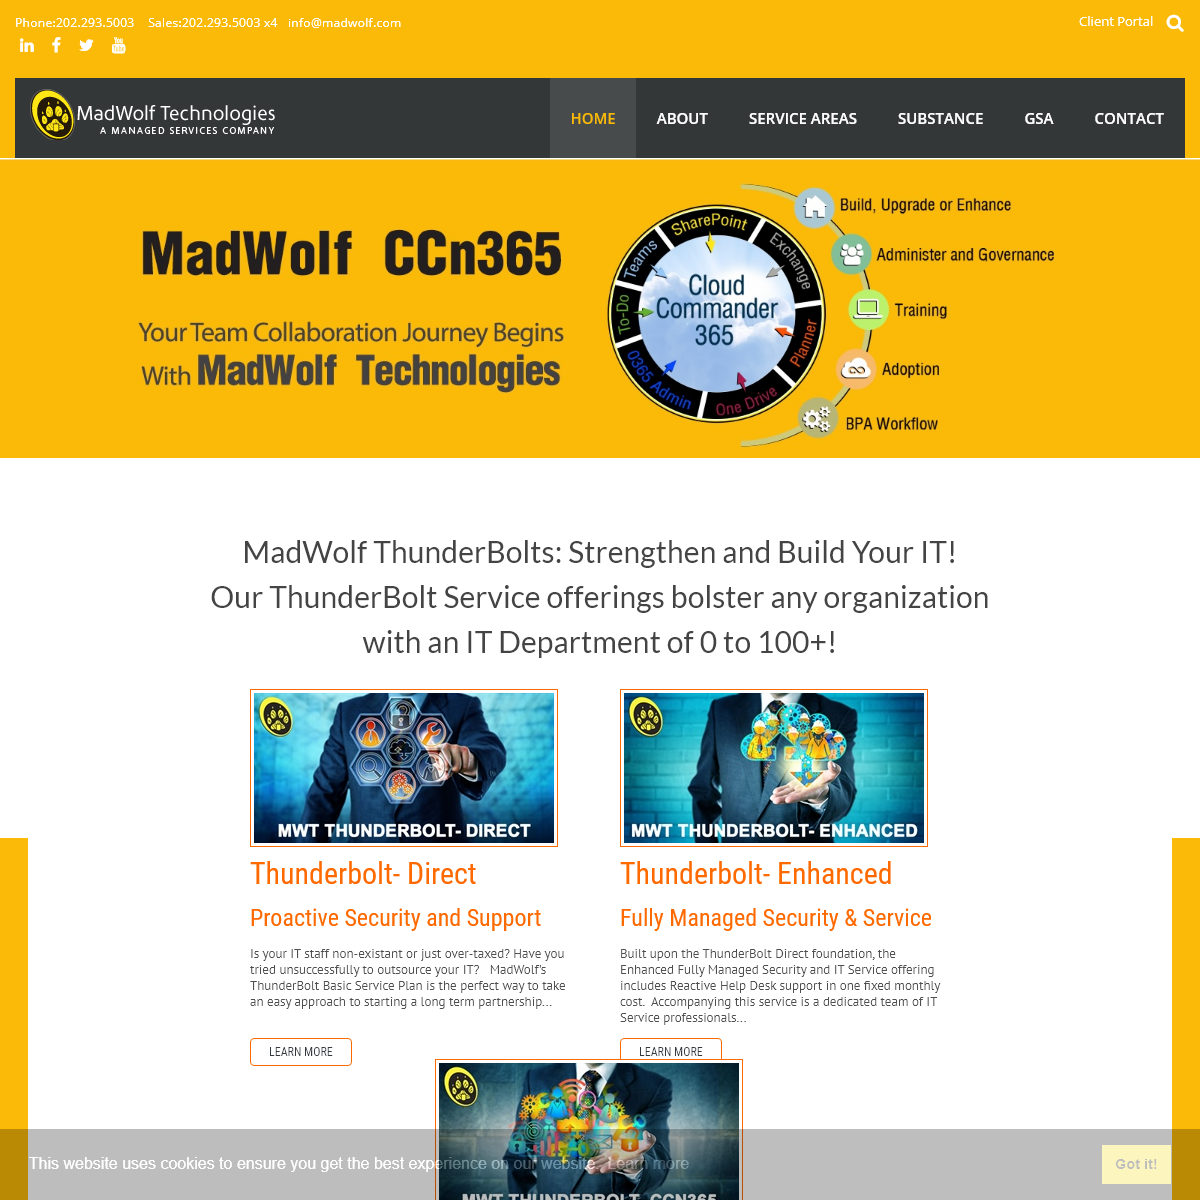 A complete backup of madwolf.com